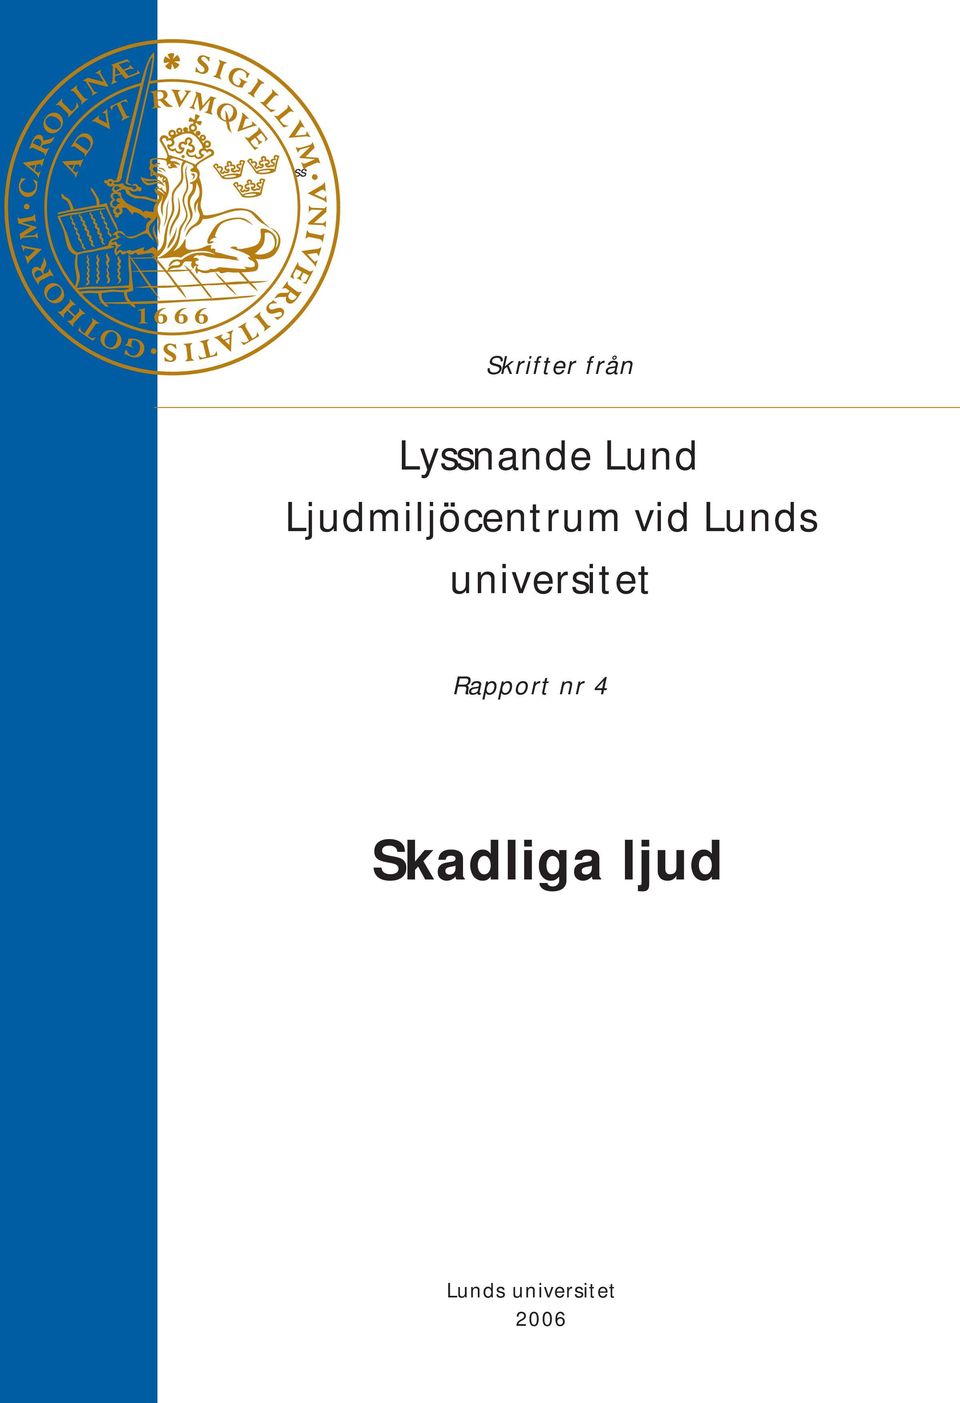 Lunds universitet Rapport nr